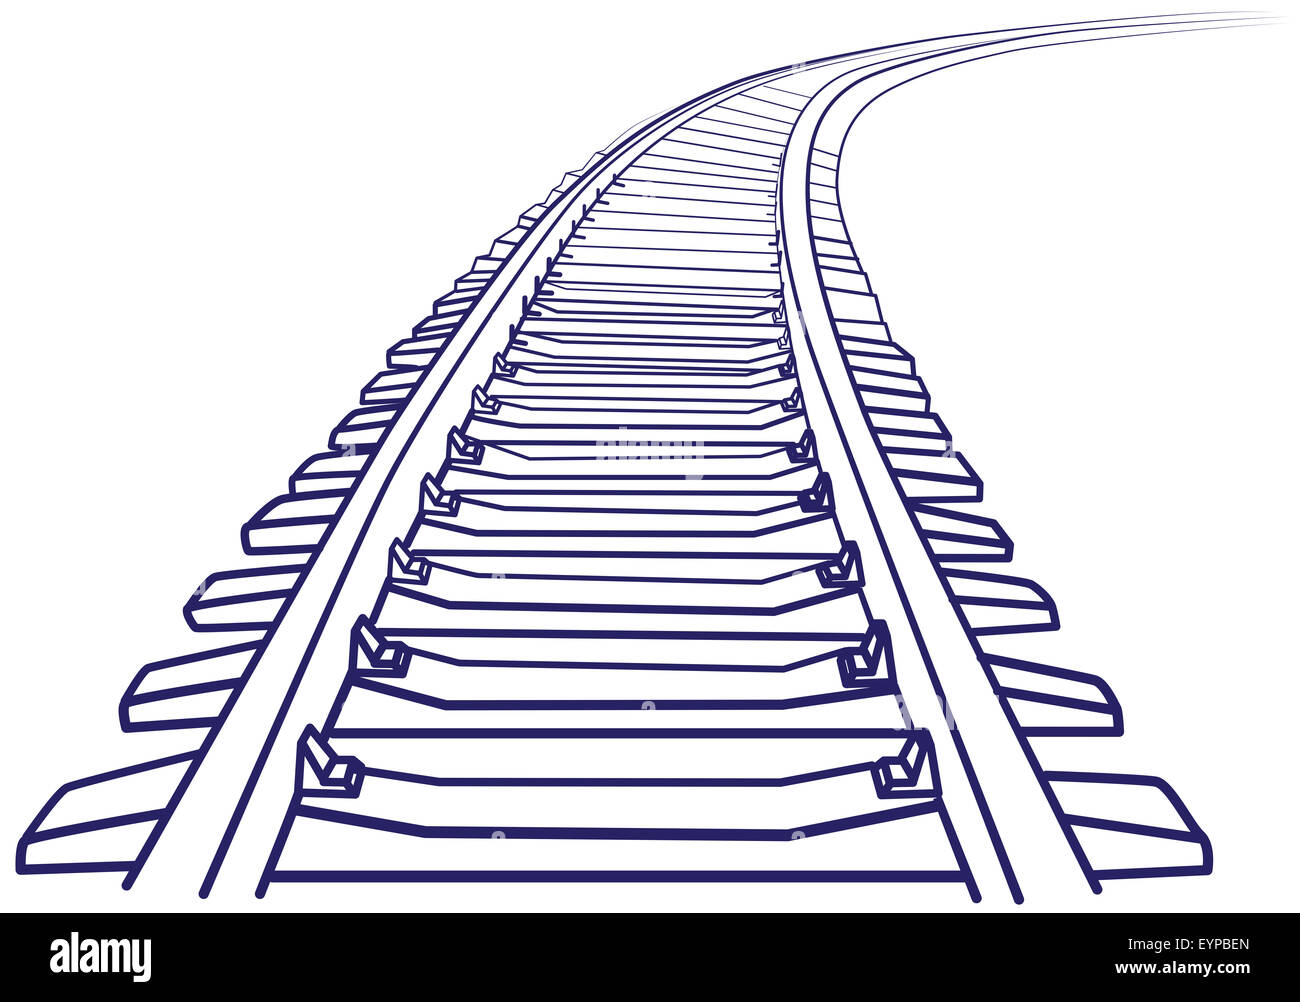 How To Draw Railroad Tracks Step By Step - Draw-herpity